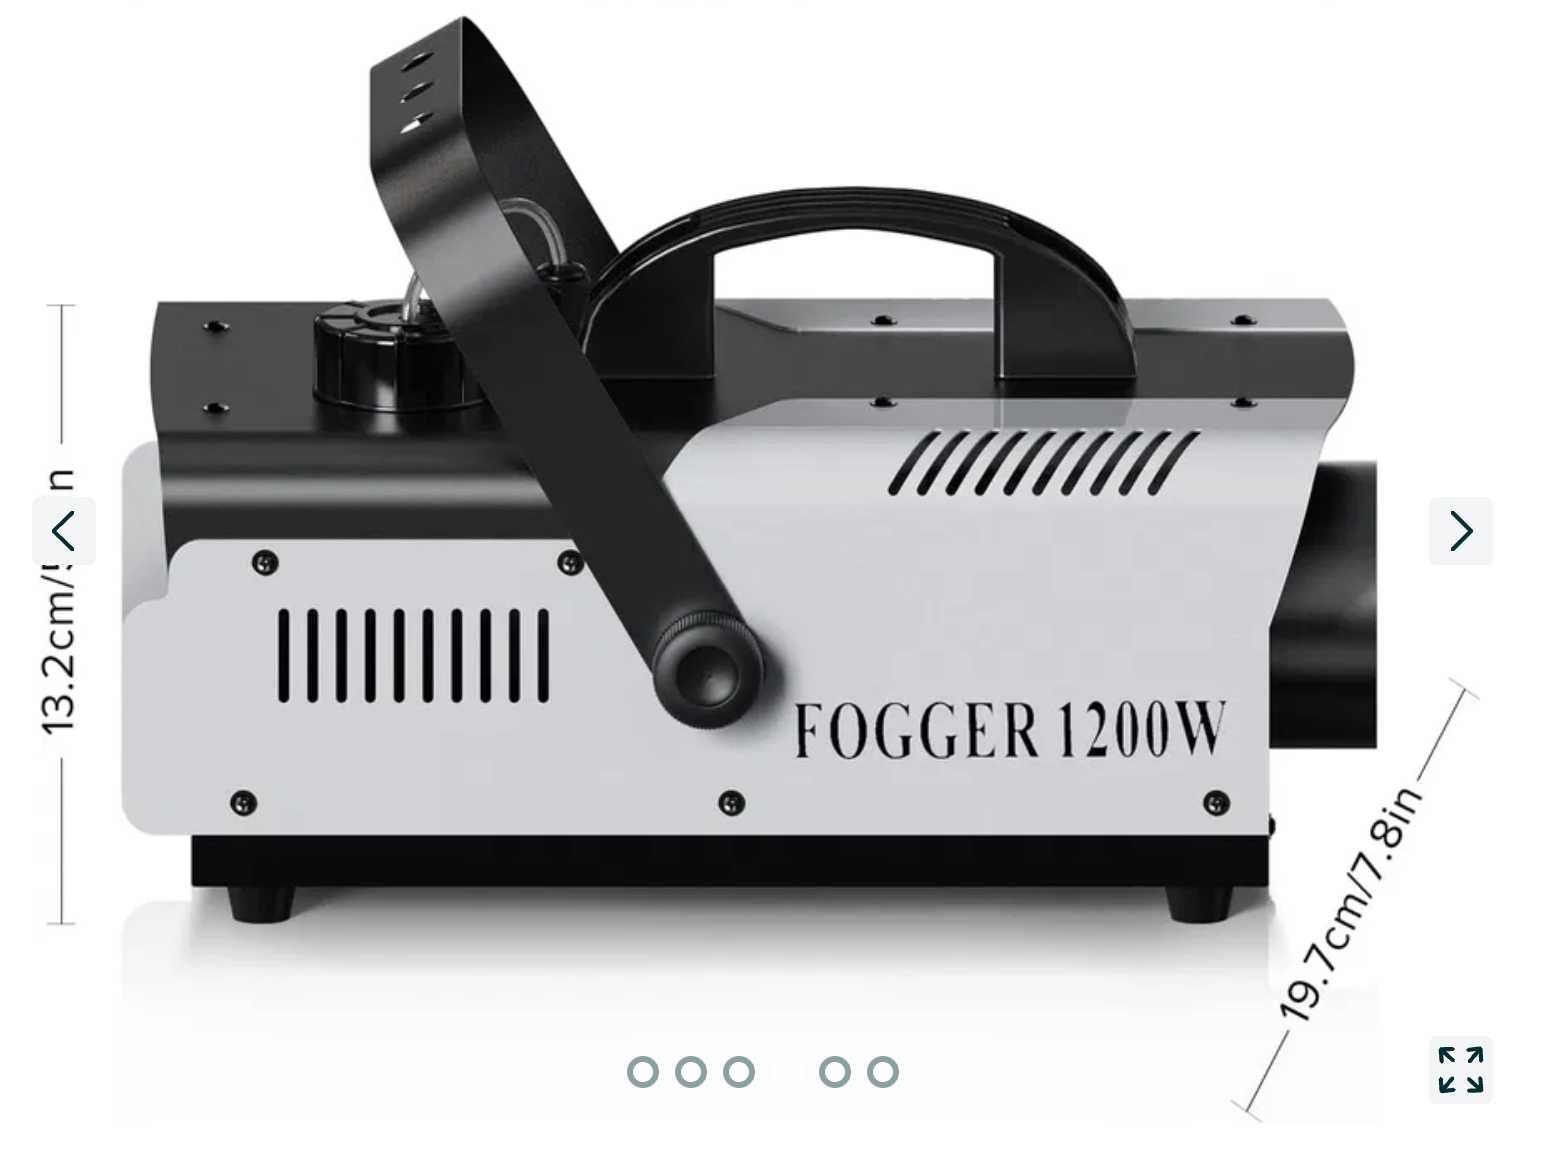 UKing 1200 W Mini Fog Machine with 6 RGB LED Controllable Lights